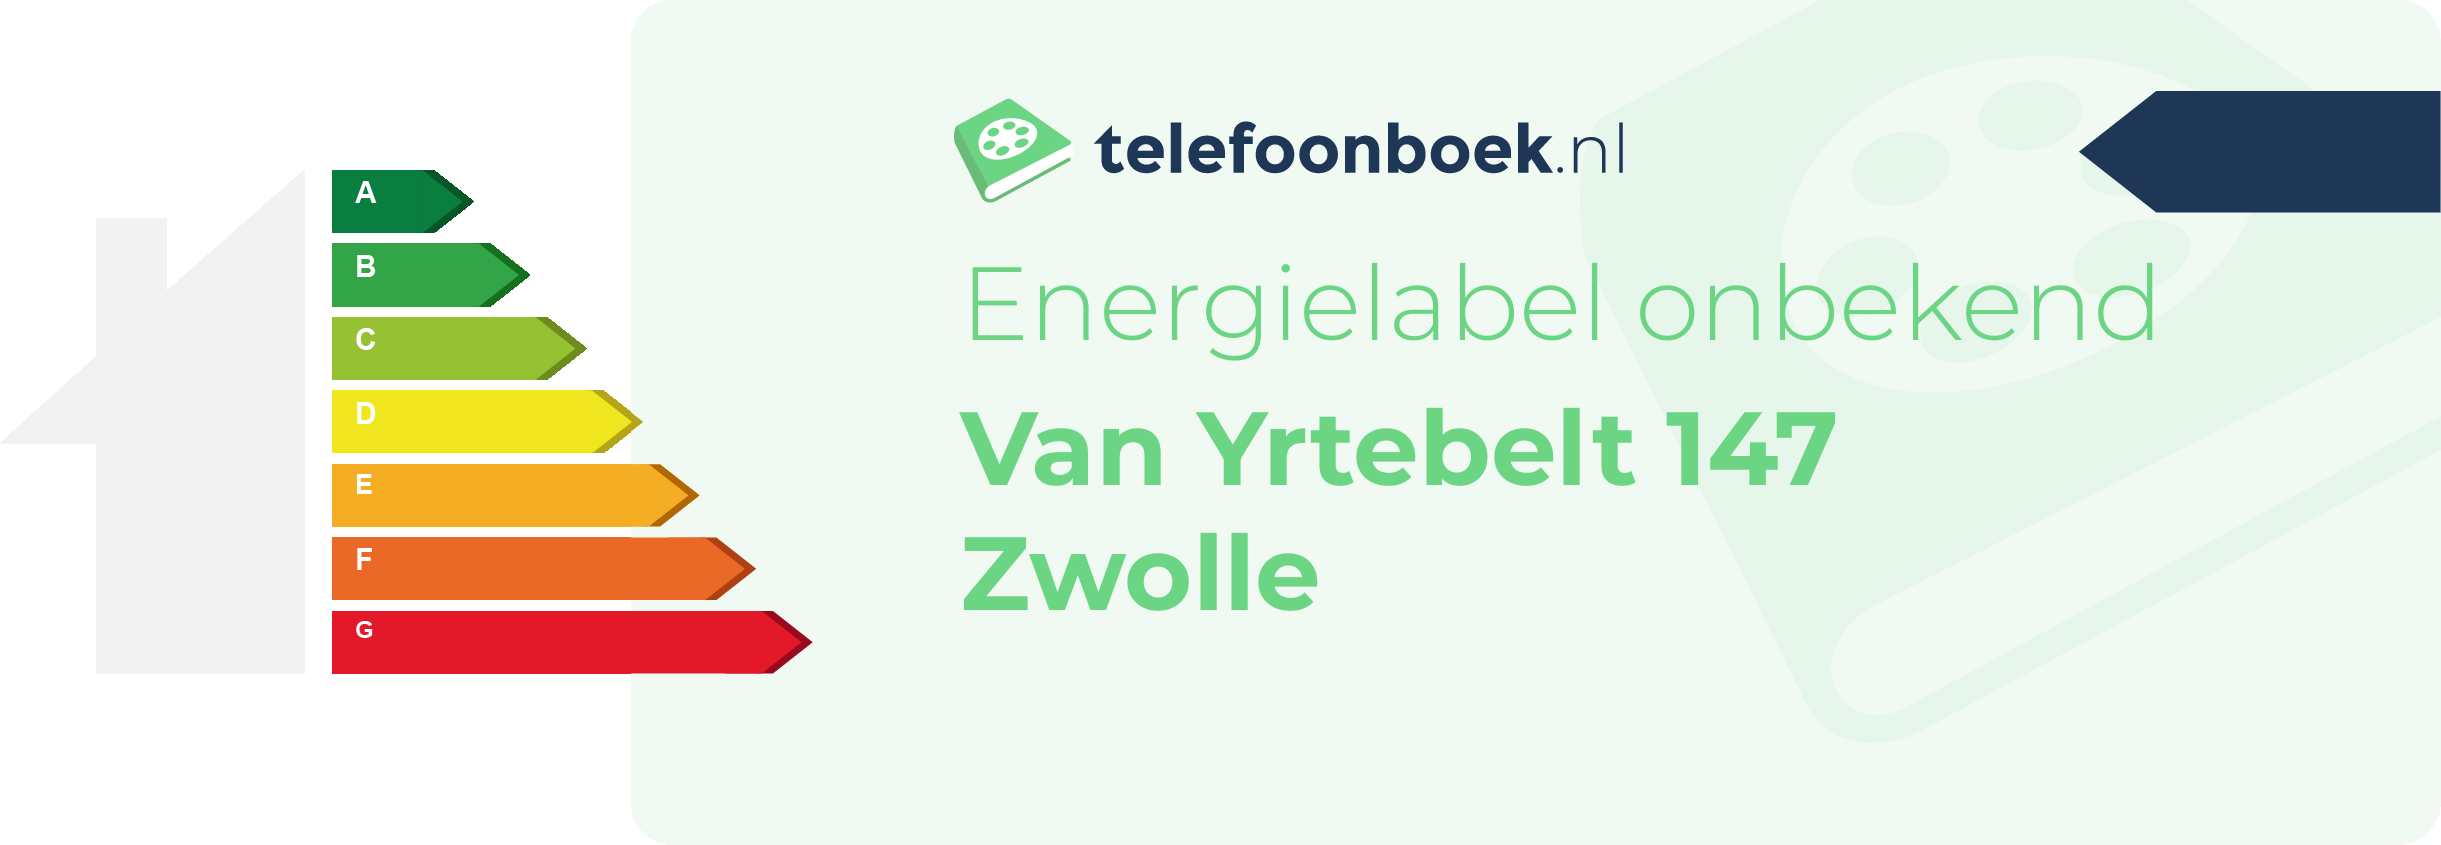 Energielabel Van Yrtebelt 147 Zwolle